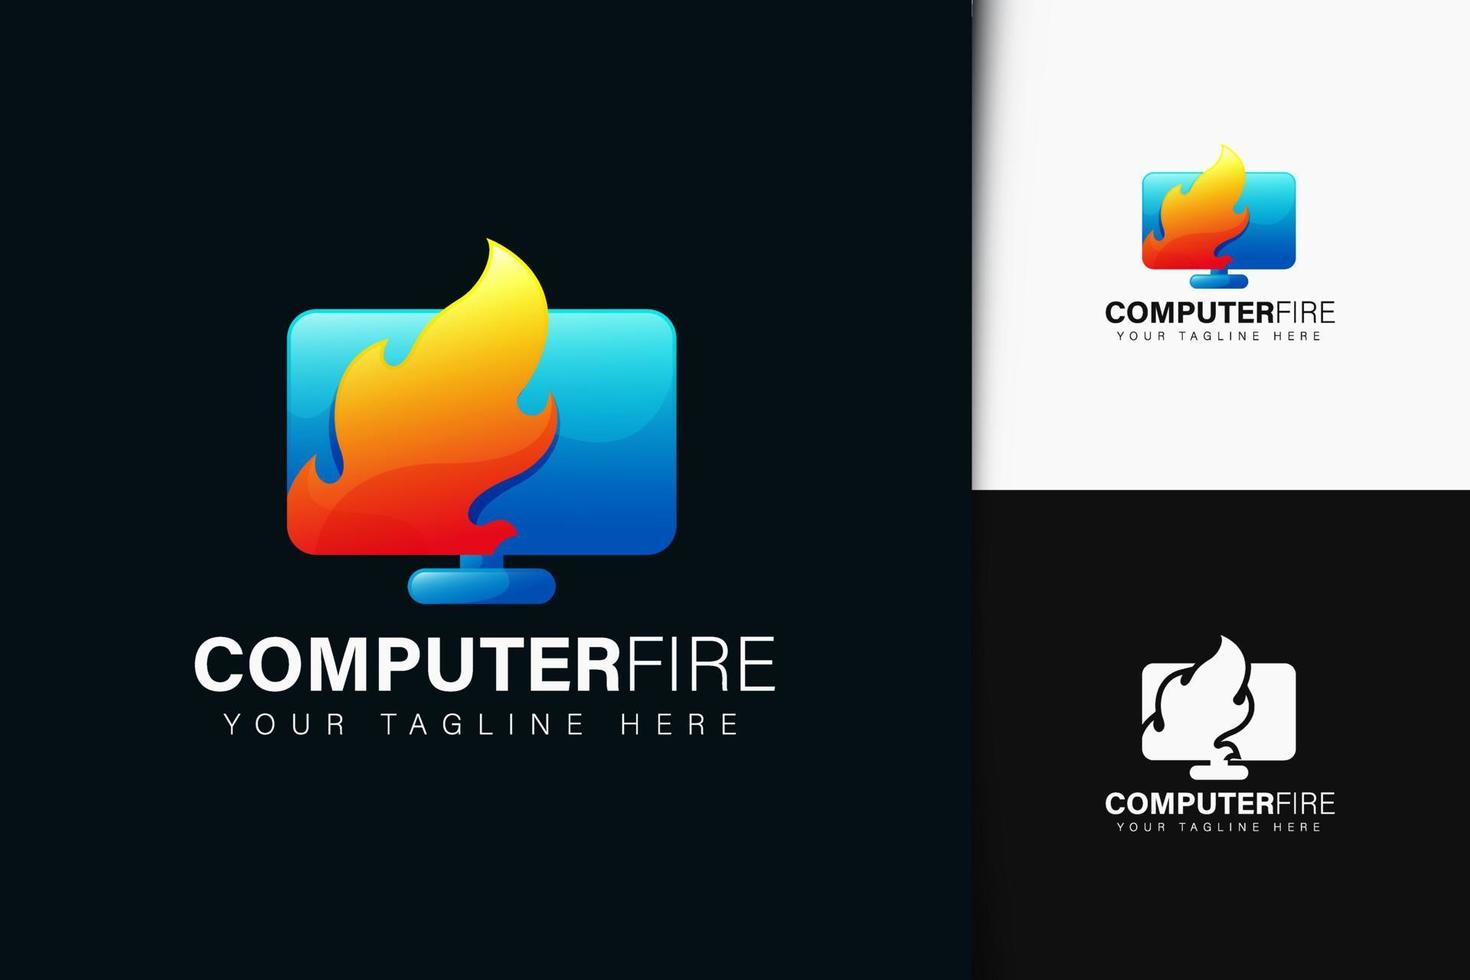 Computer fire logo design with gradient vector